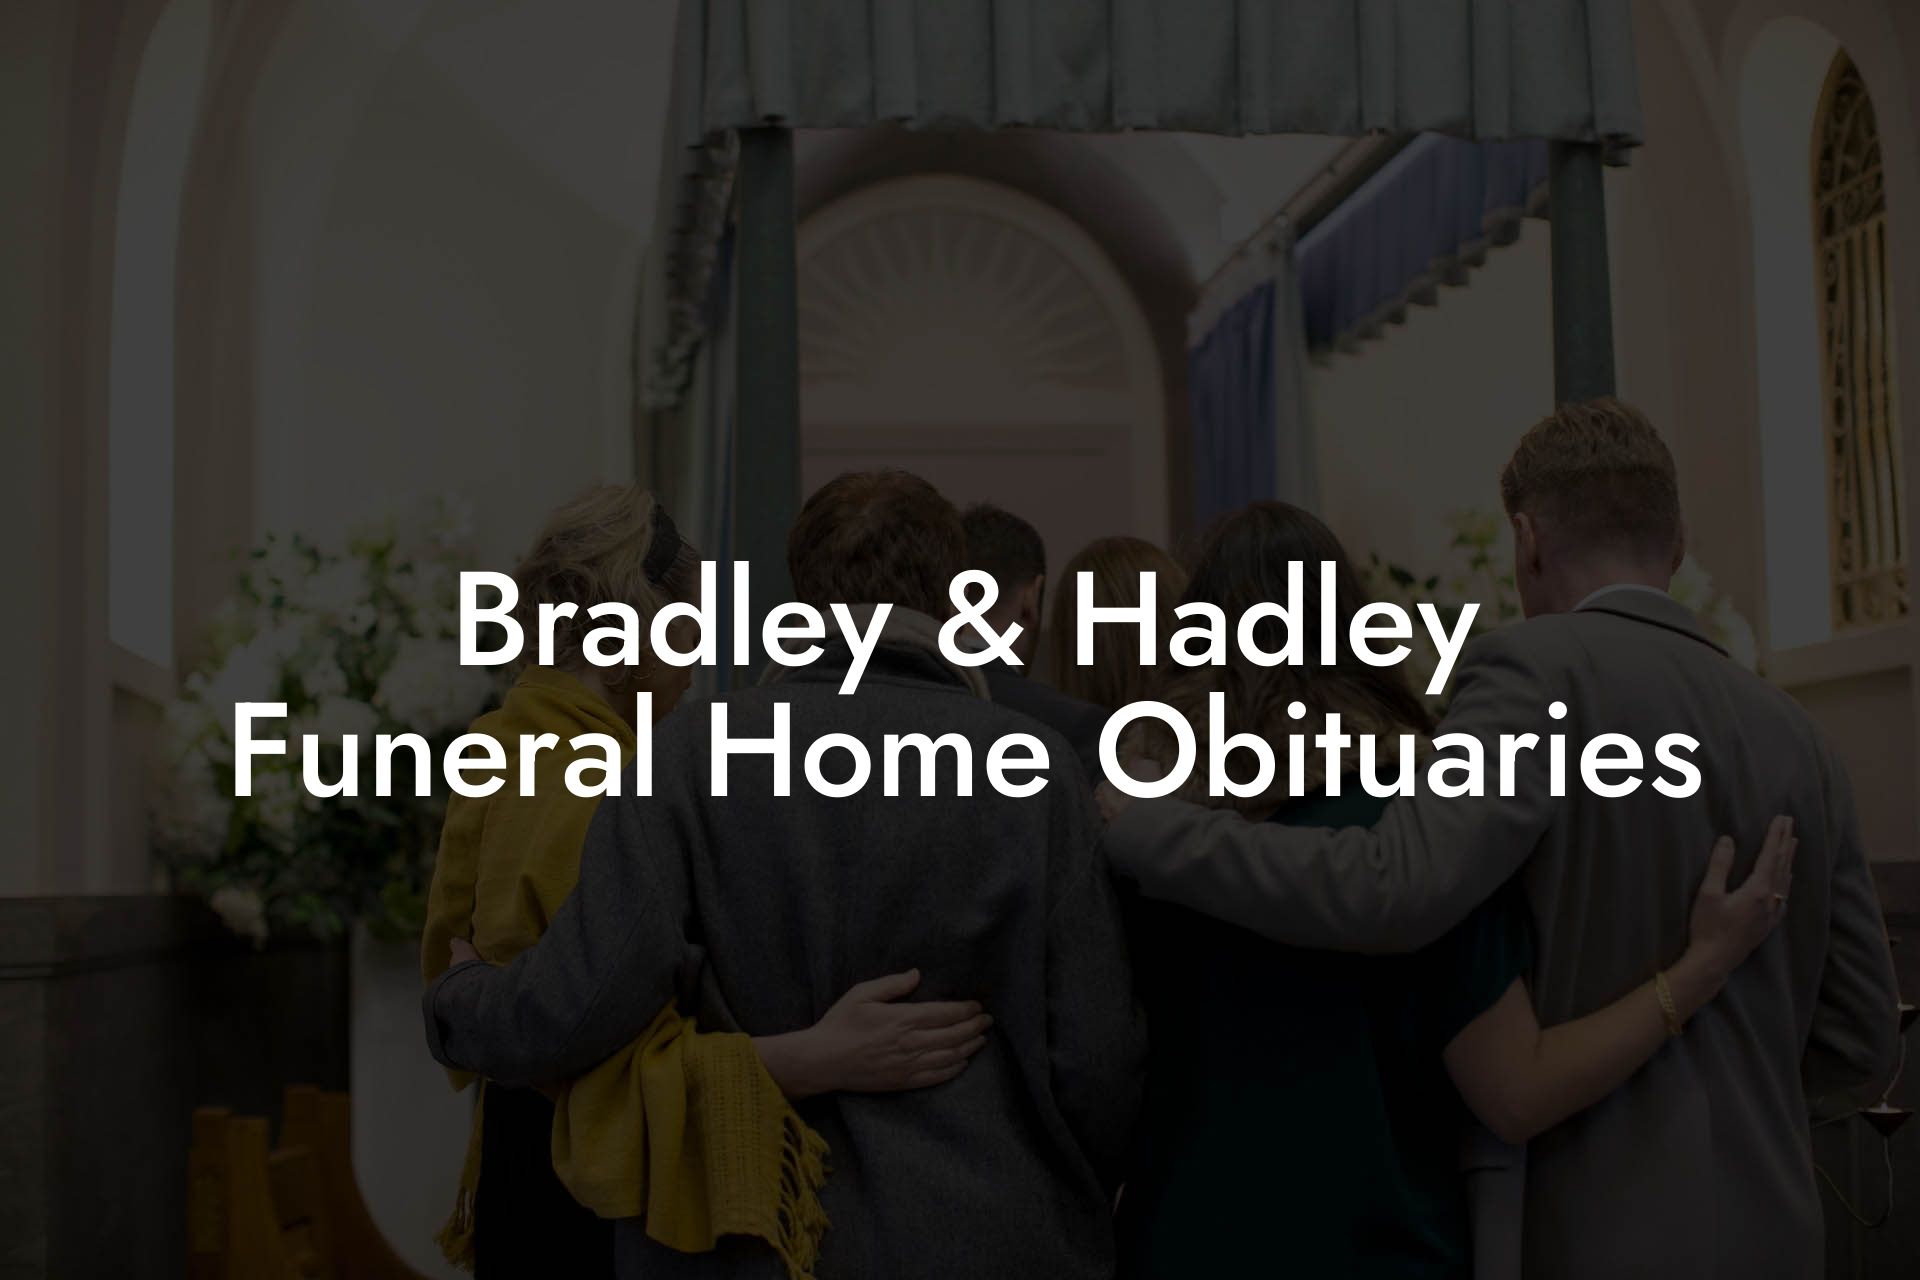 Bradley & Hadley Funeral Home Obituaries